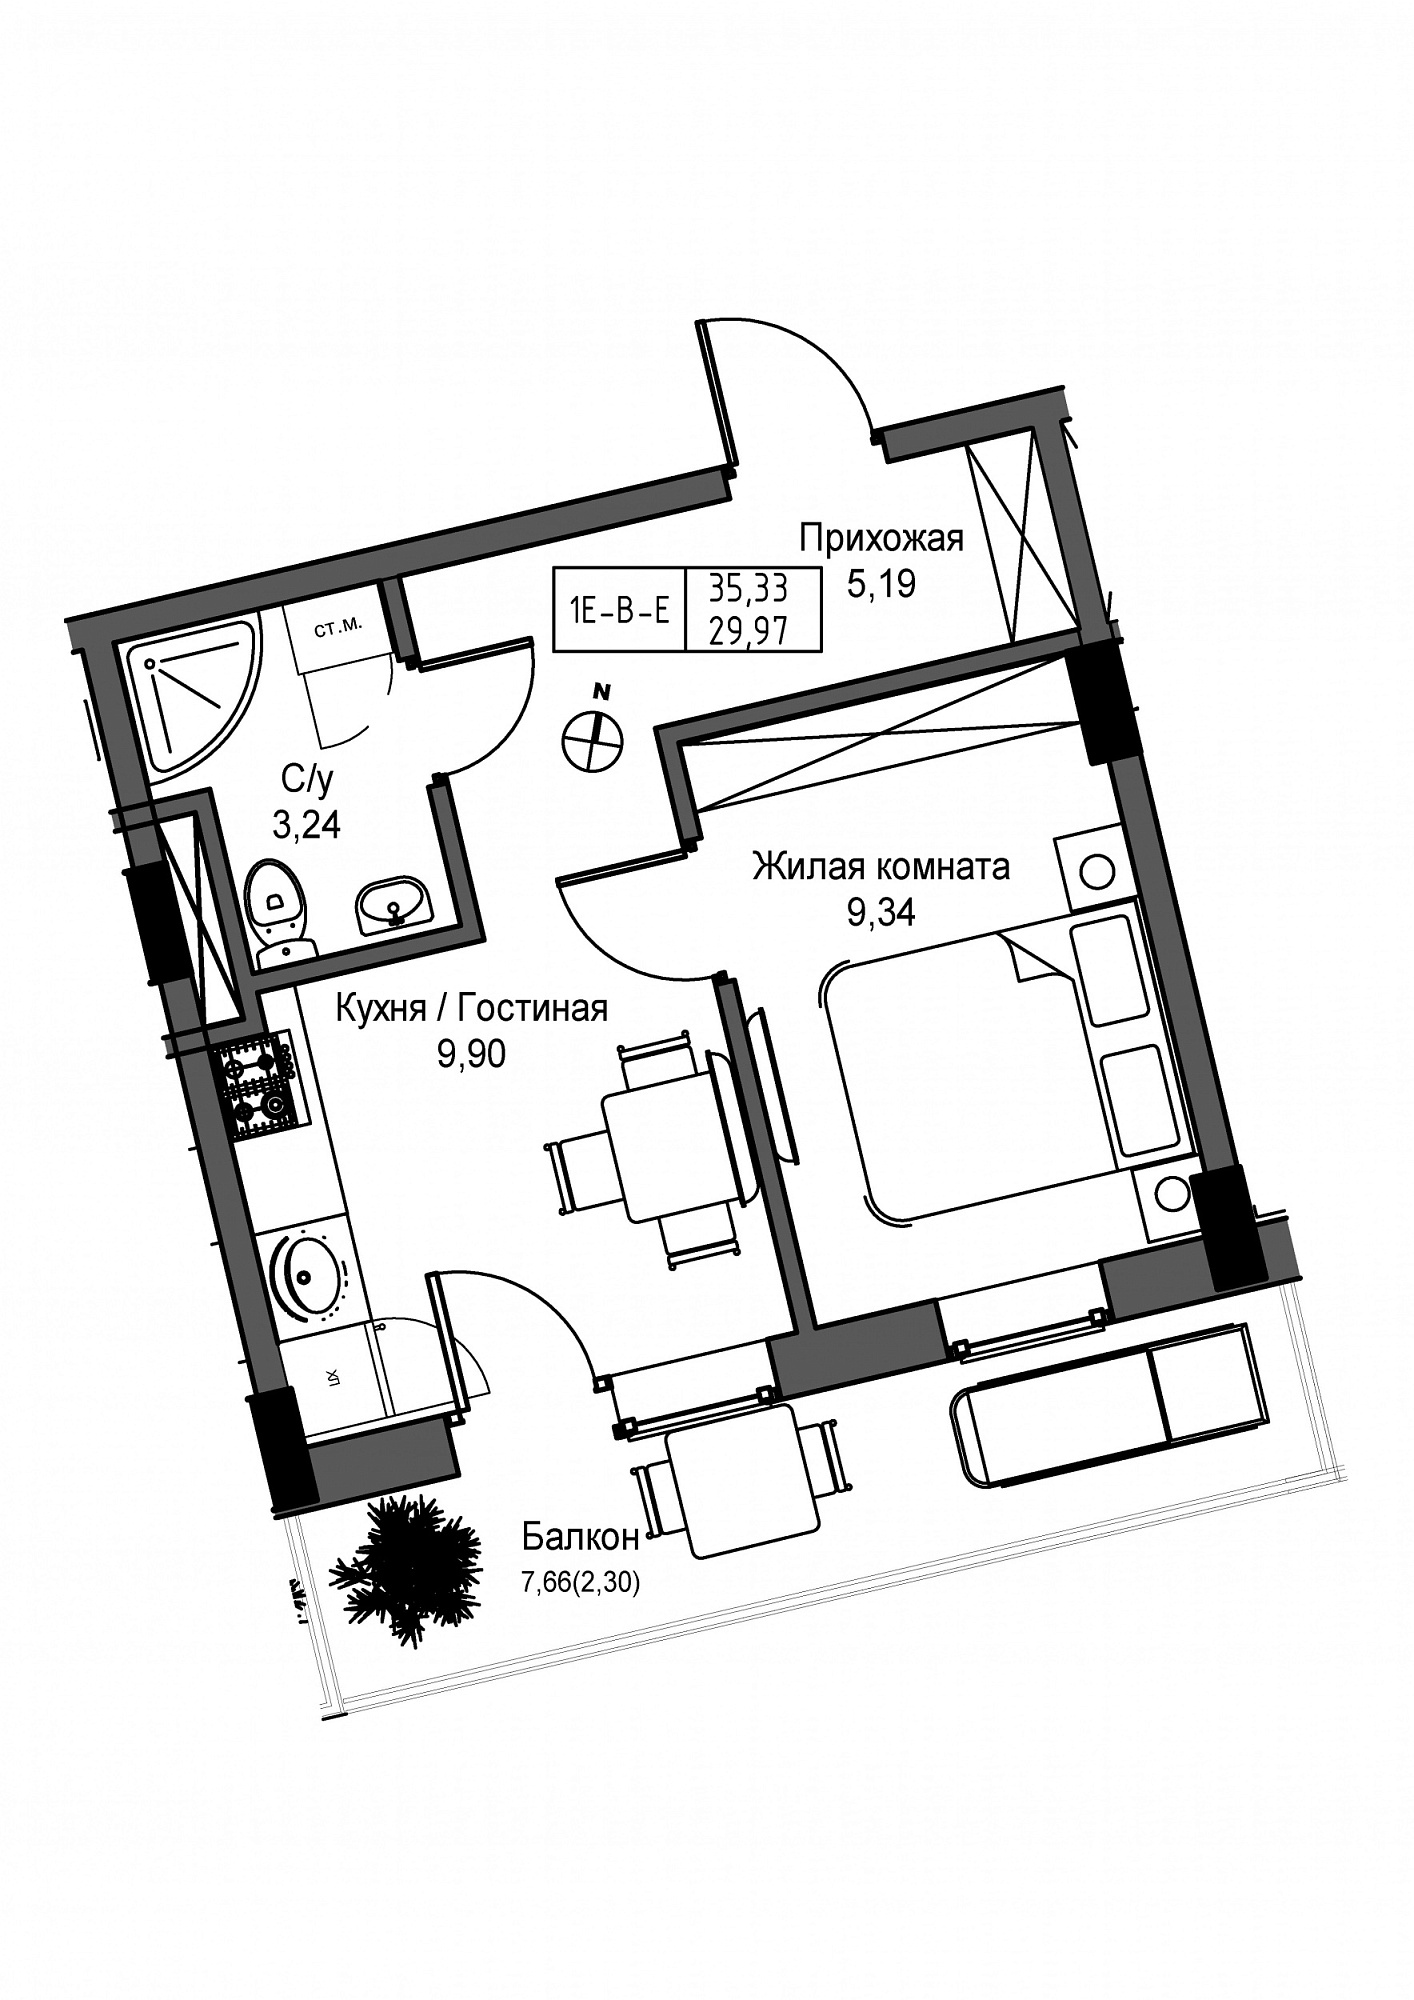 Планування 1-к квартира площею 29.97м2, UM-004-07/0013.